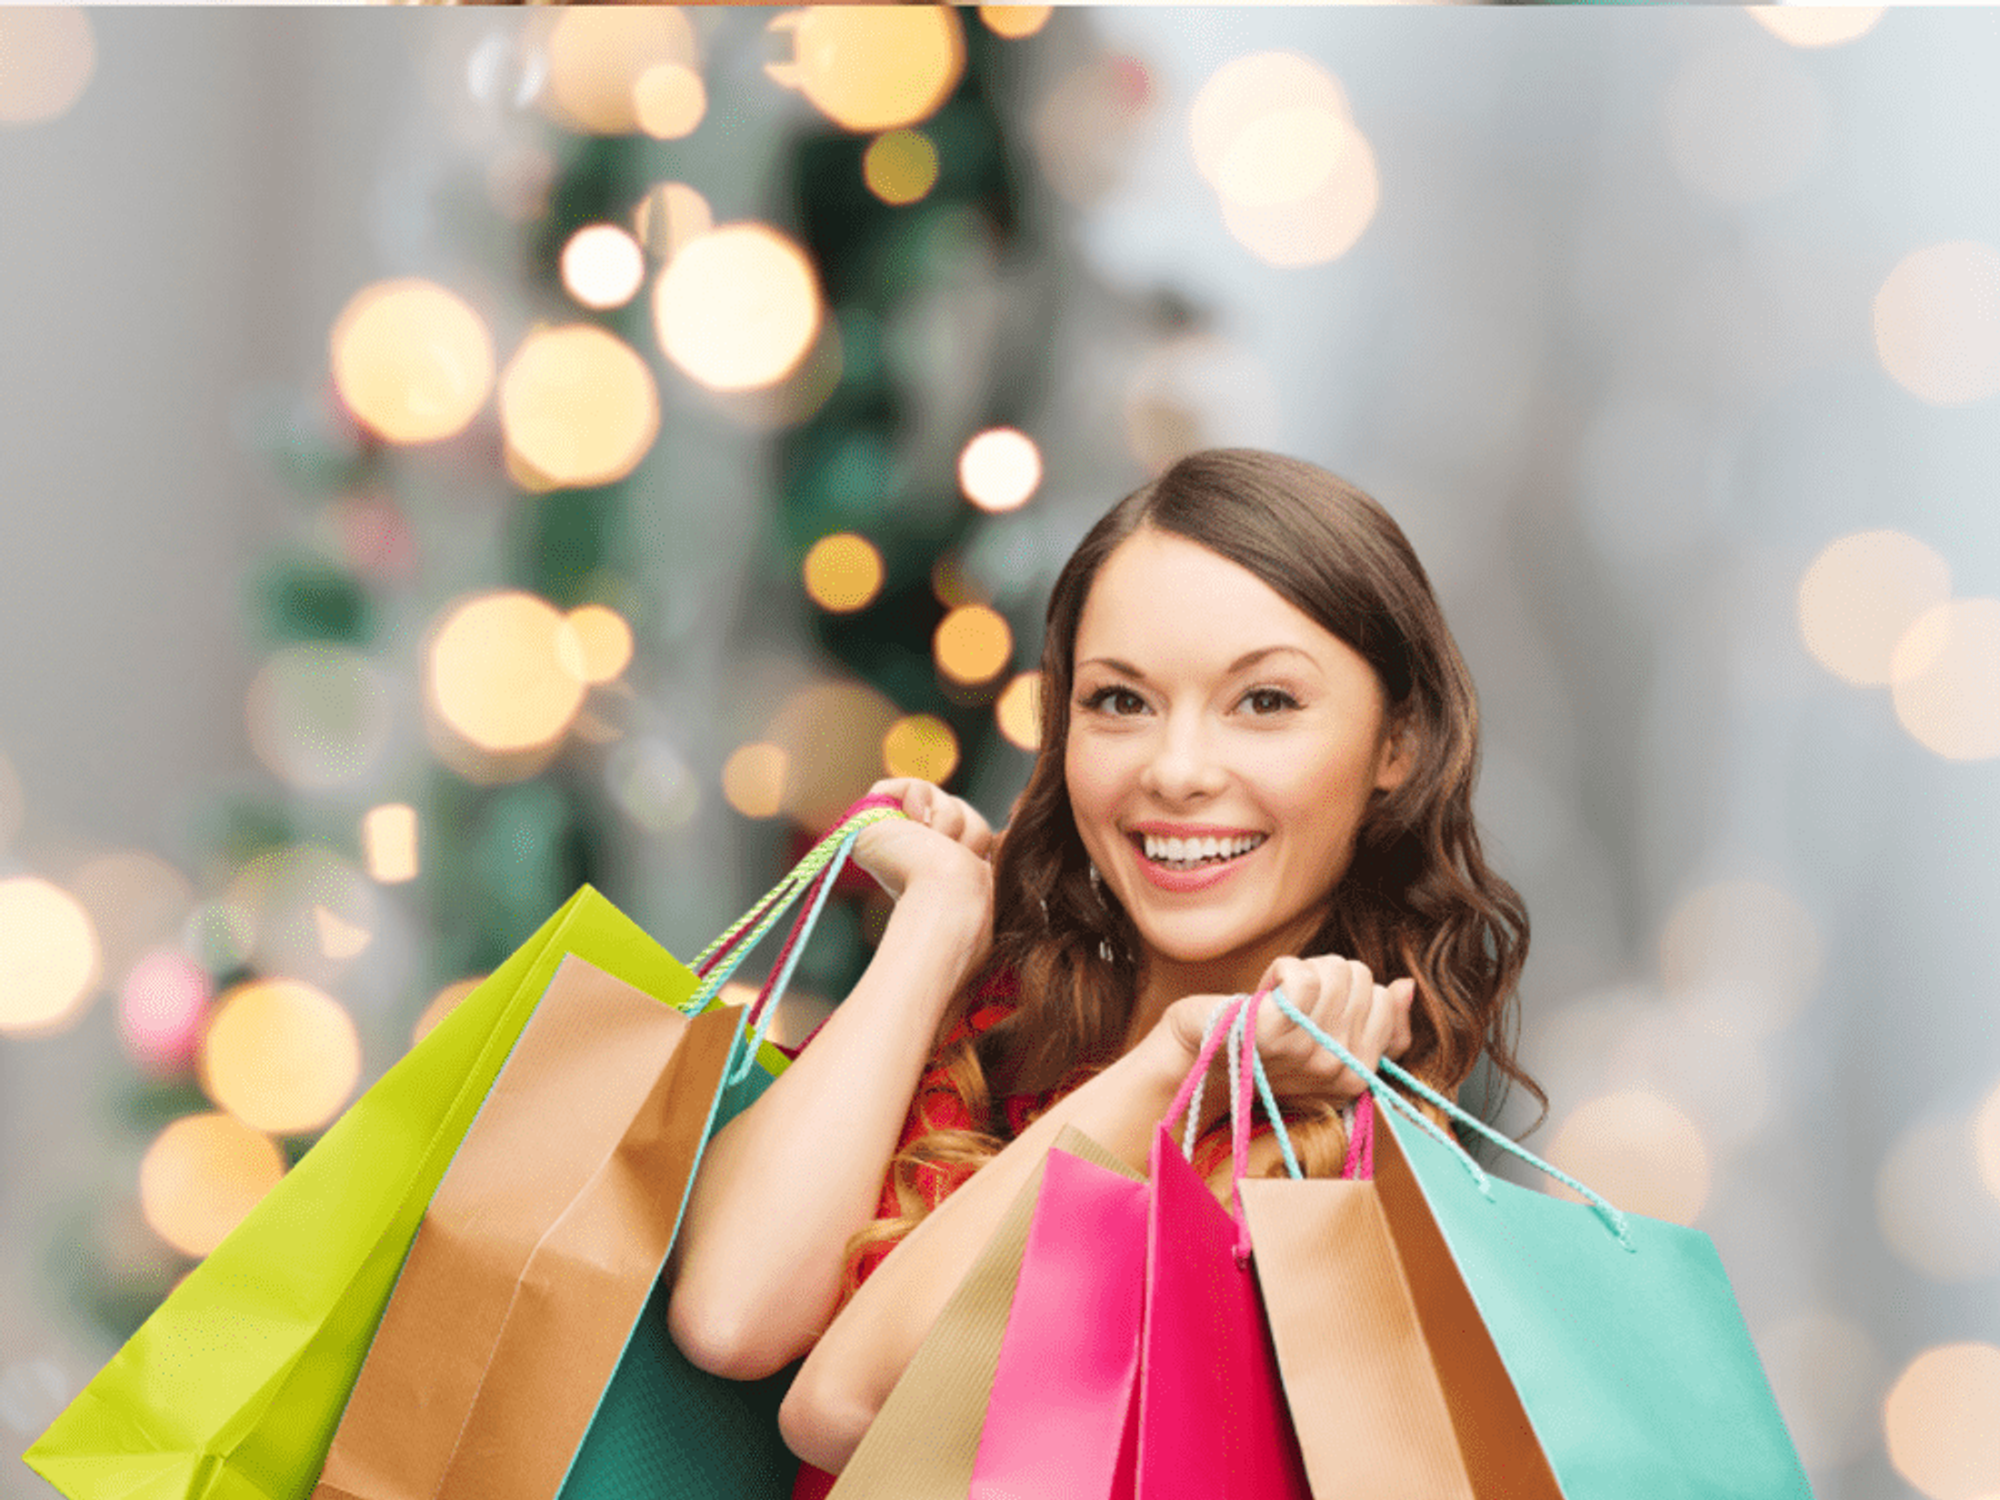 Woman holding bags, Christmas shopping